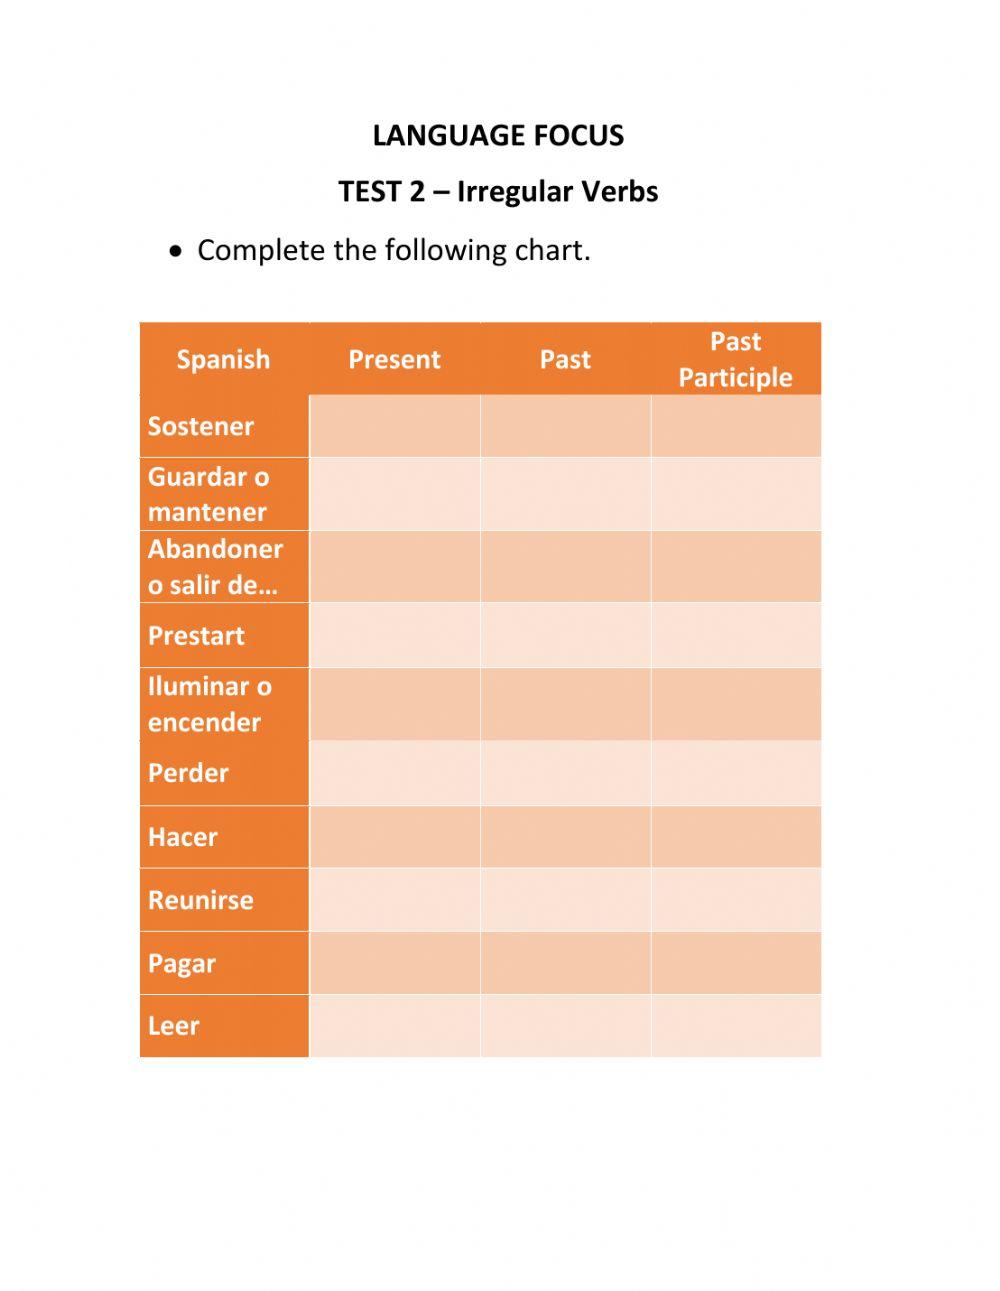 Irregular Verbs - Test 2